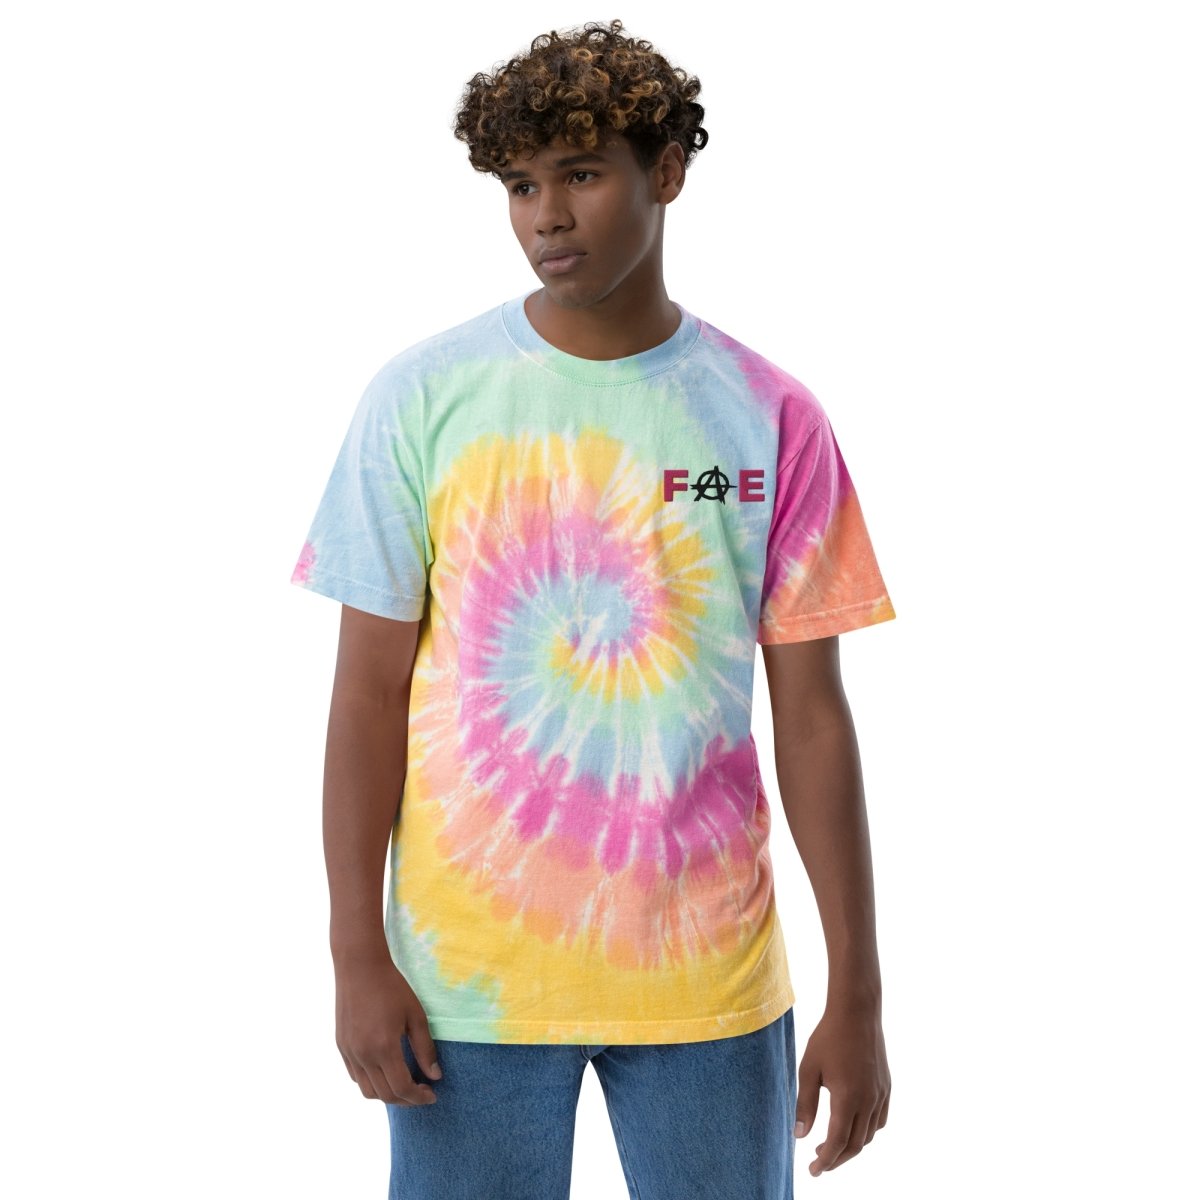 FAE Anarchist Oversized Tie-Dye Shirt - On Trend Shirts